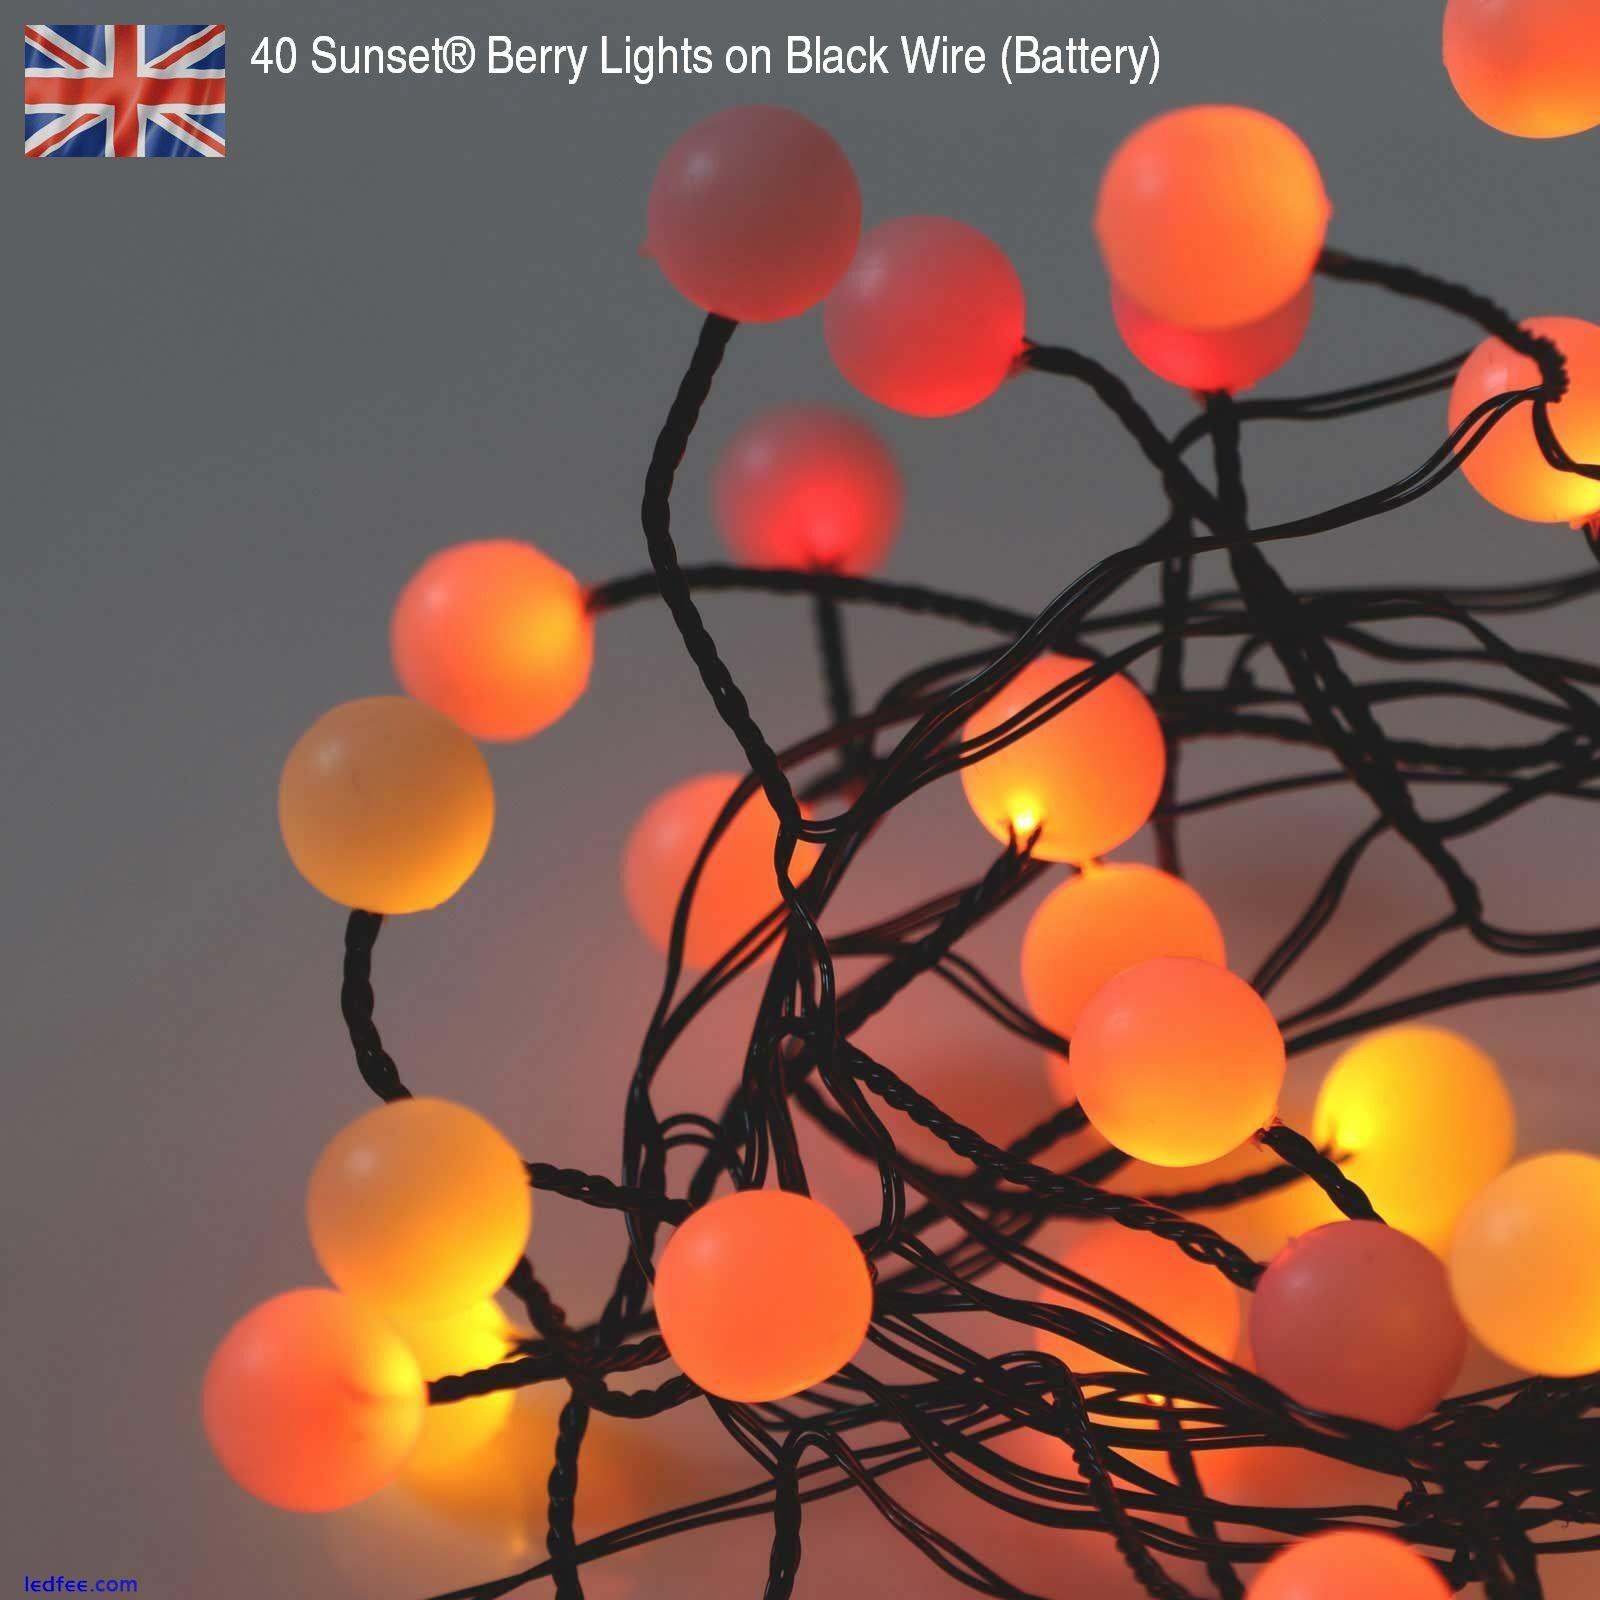 Premium LED Cluster Lights, Sunset & Warm White Fairy Lights for Christmas 4 